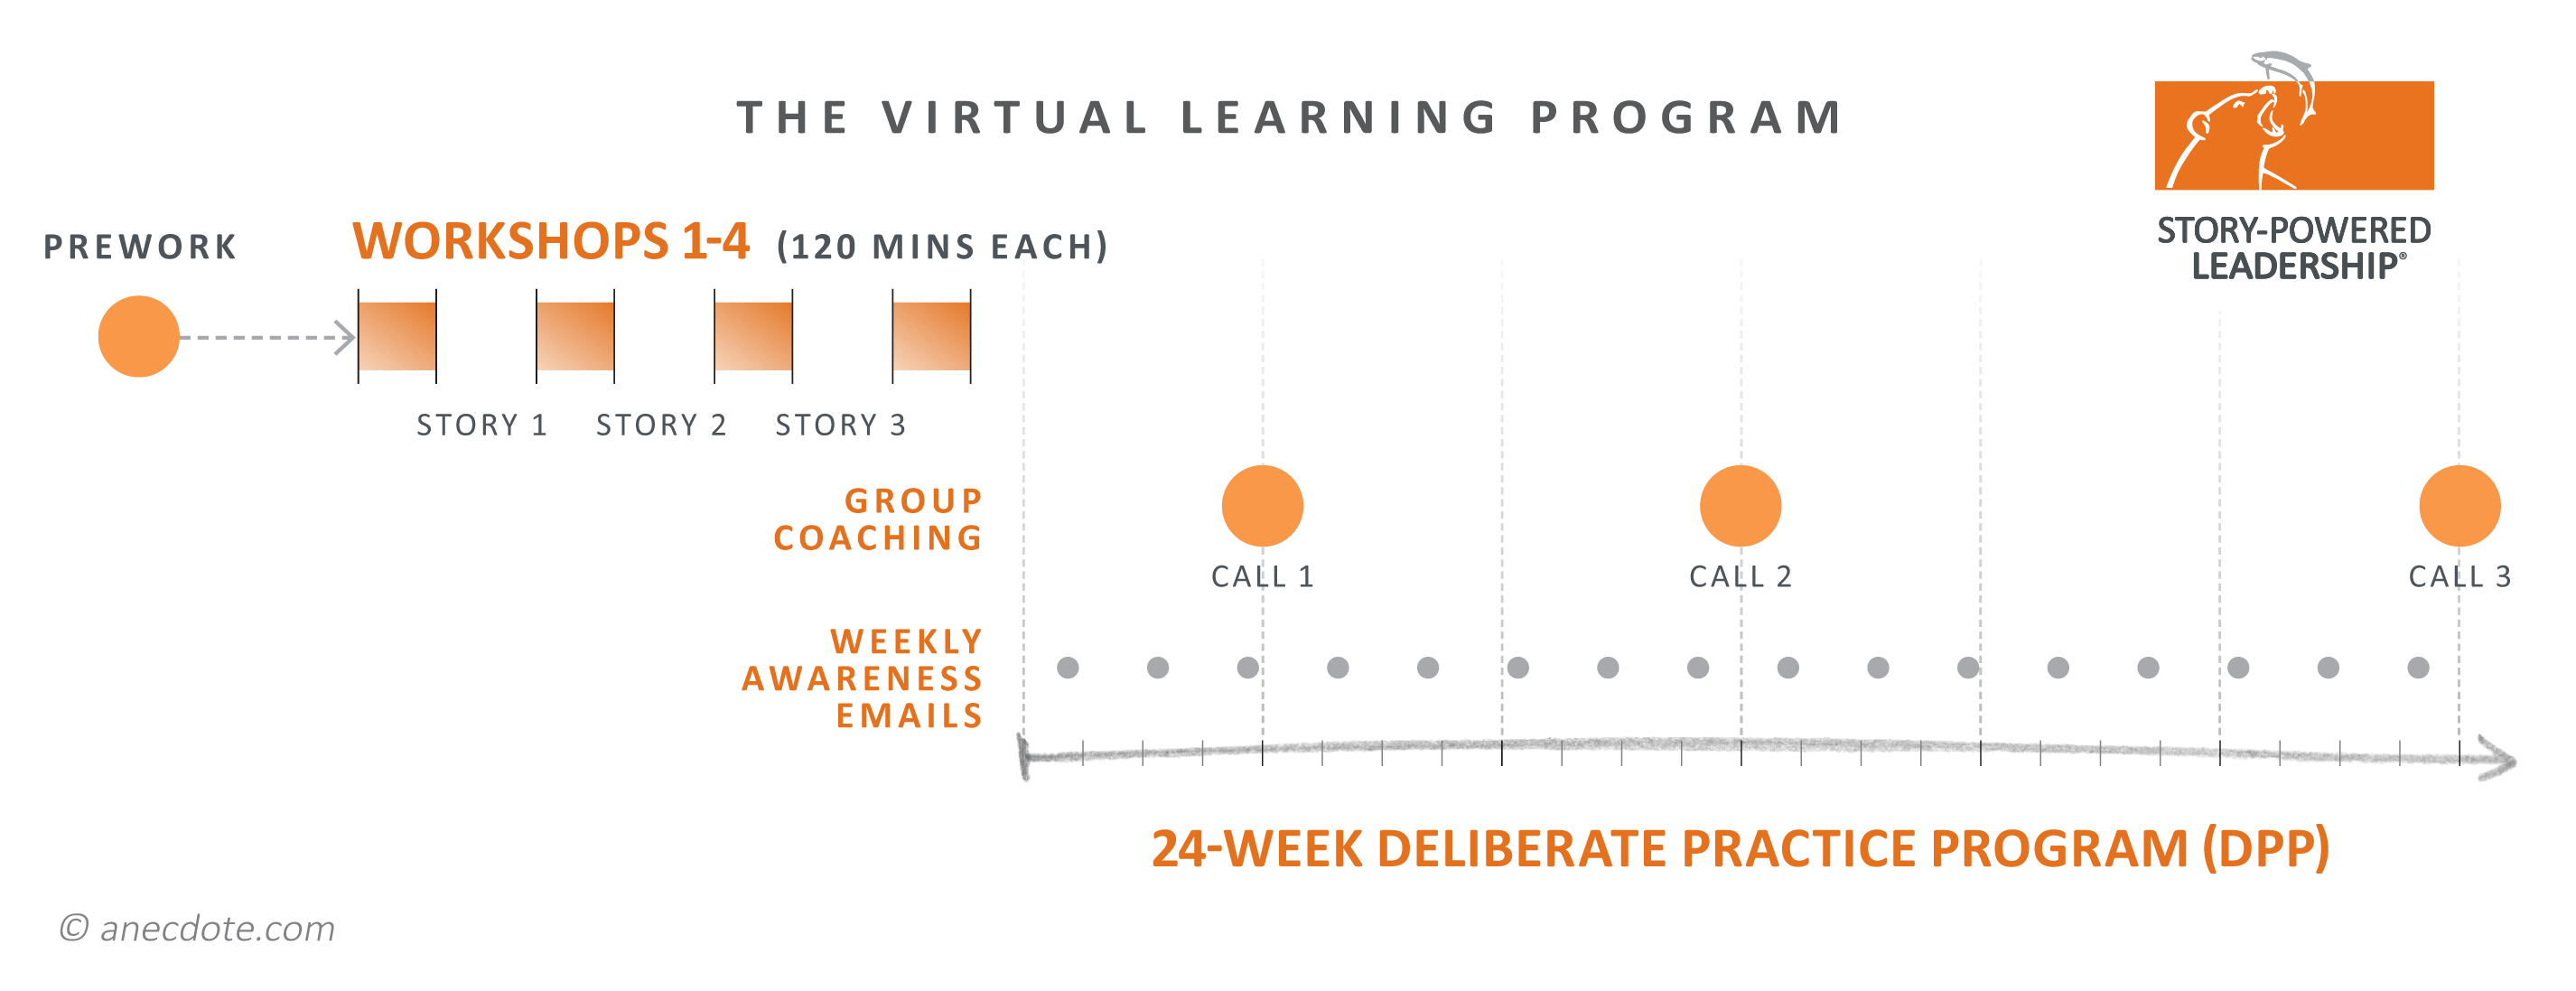 The virtual learning program Story-Powered Leadership